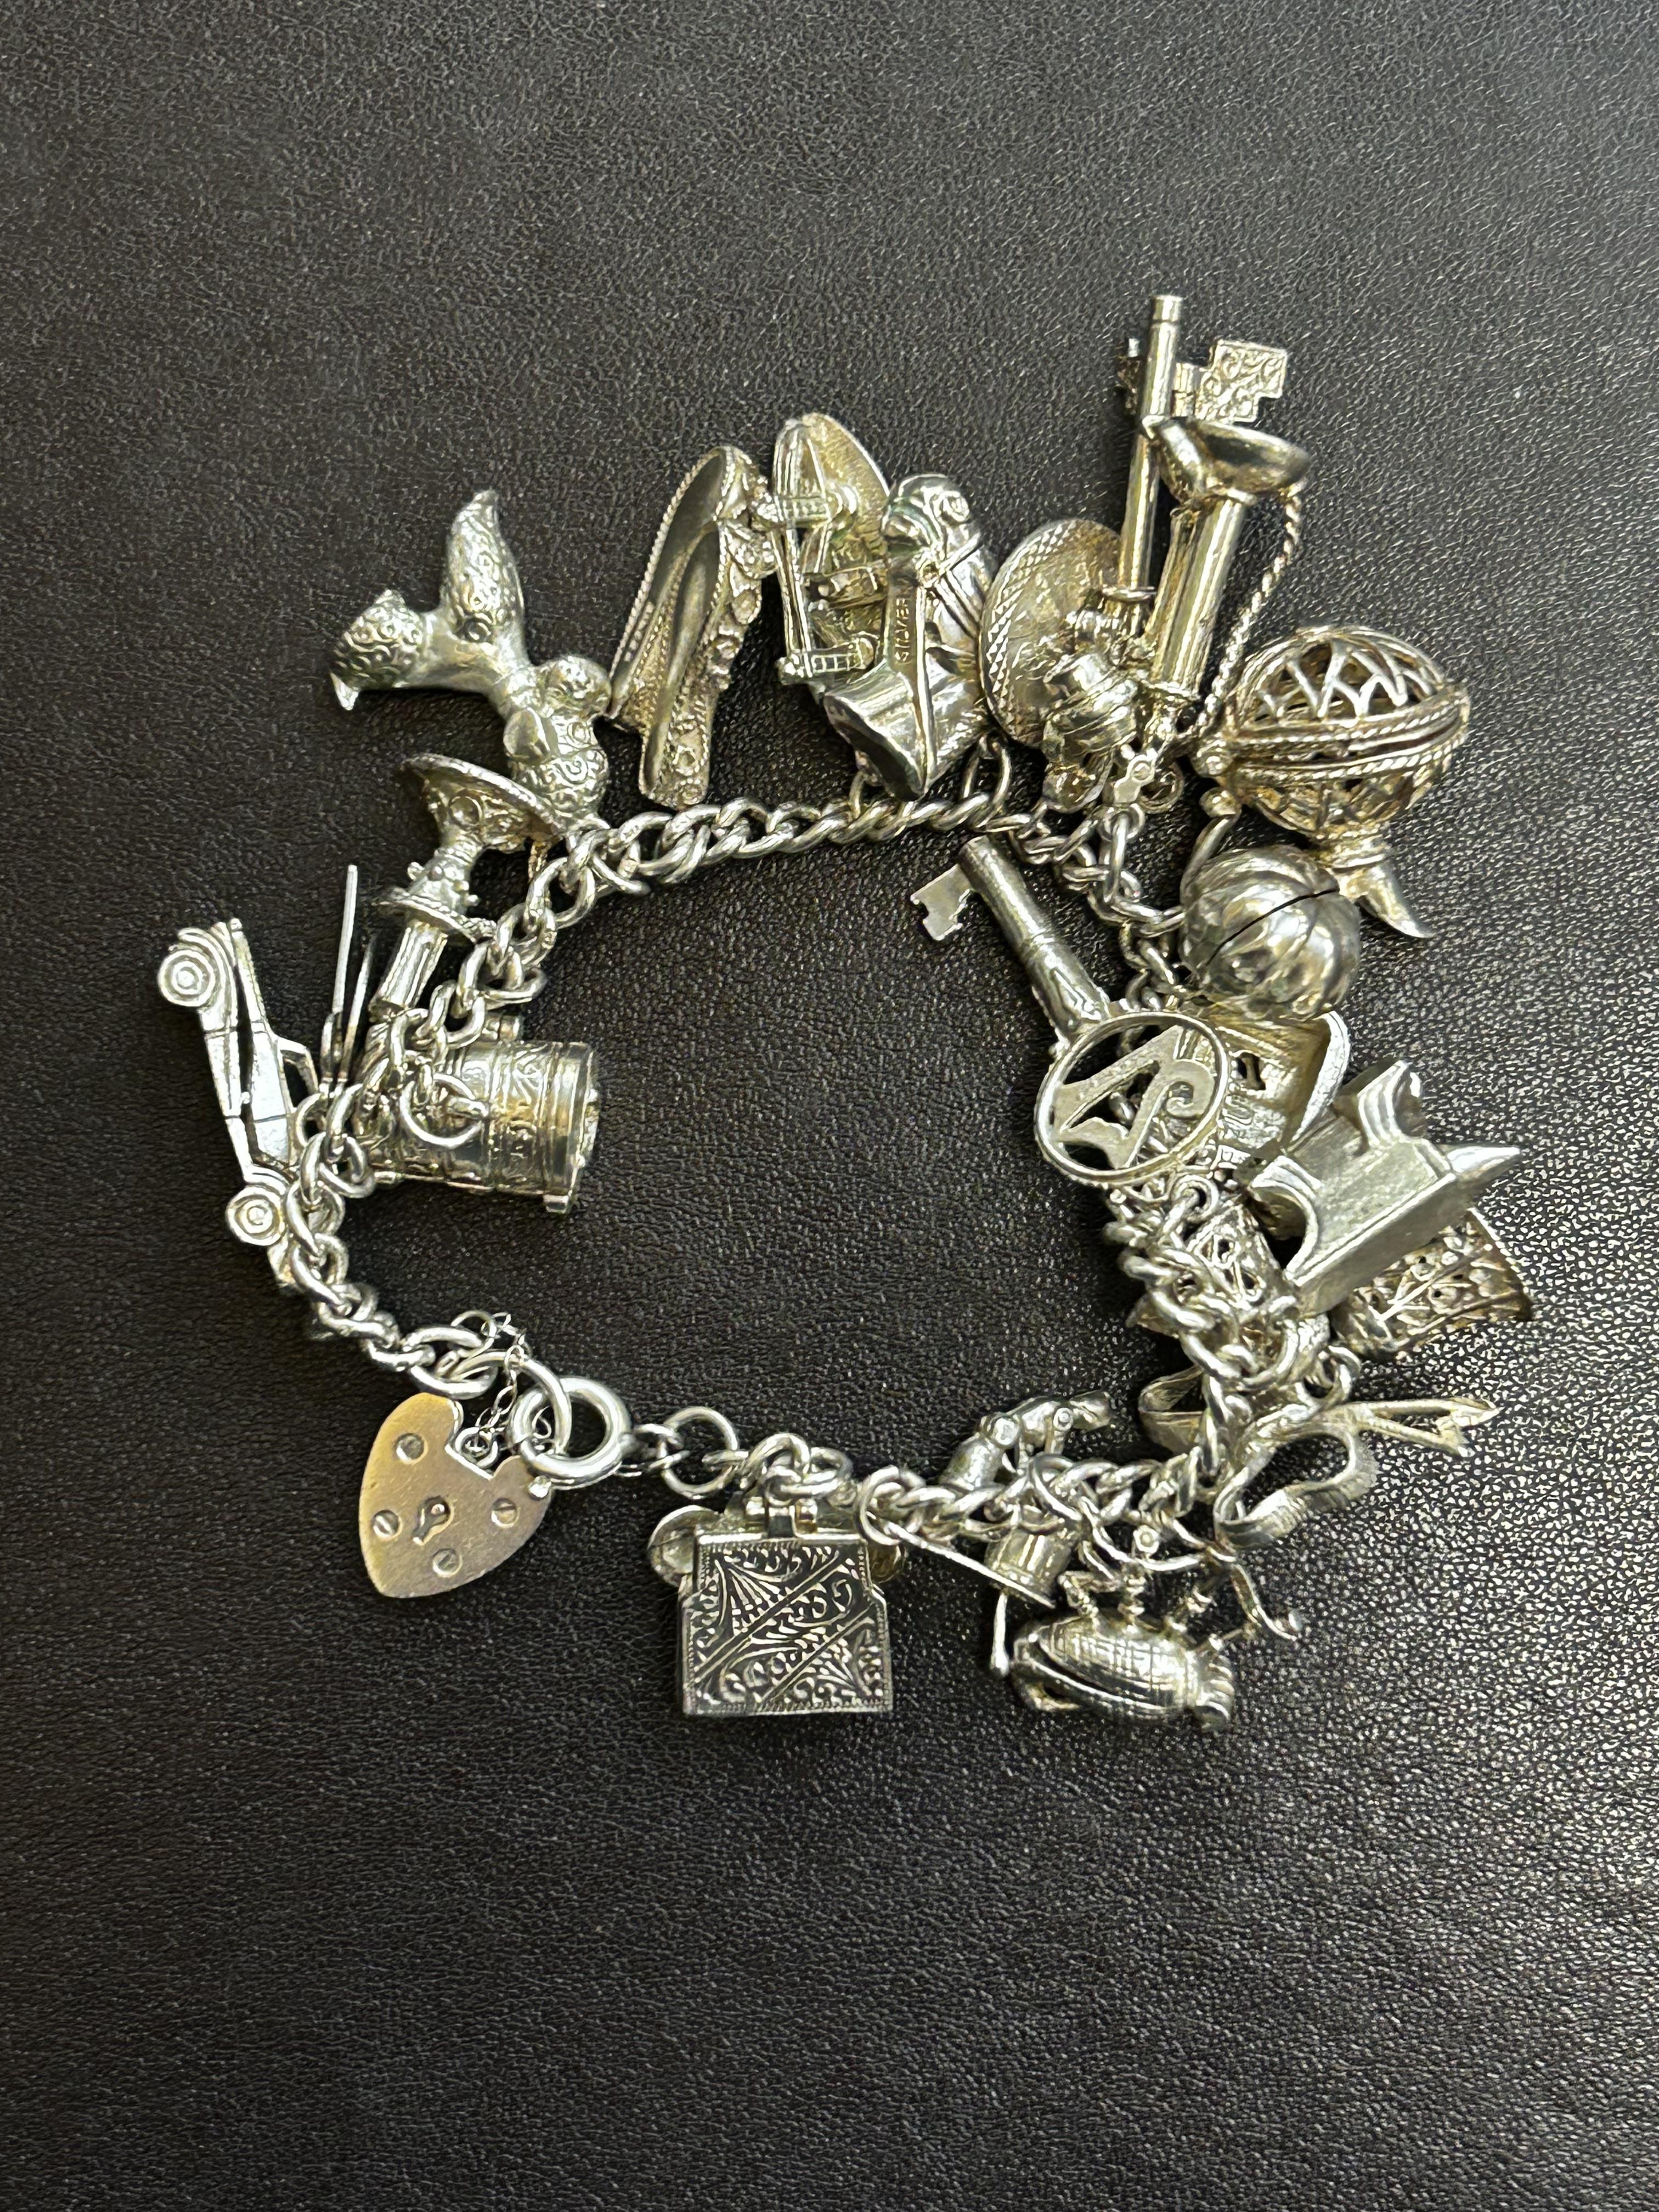 Silver charm bracelet 91g - 20 charms